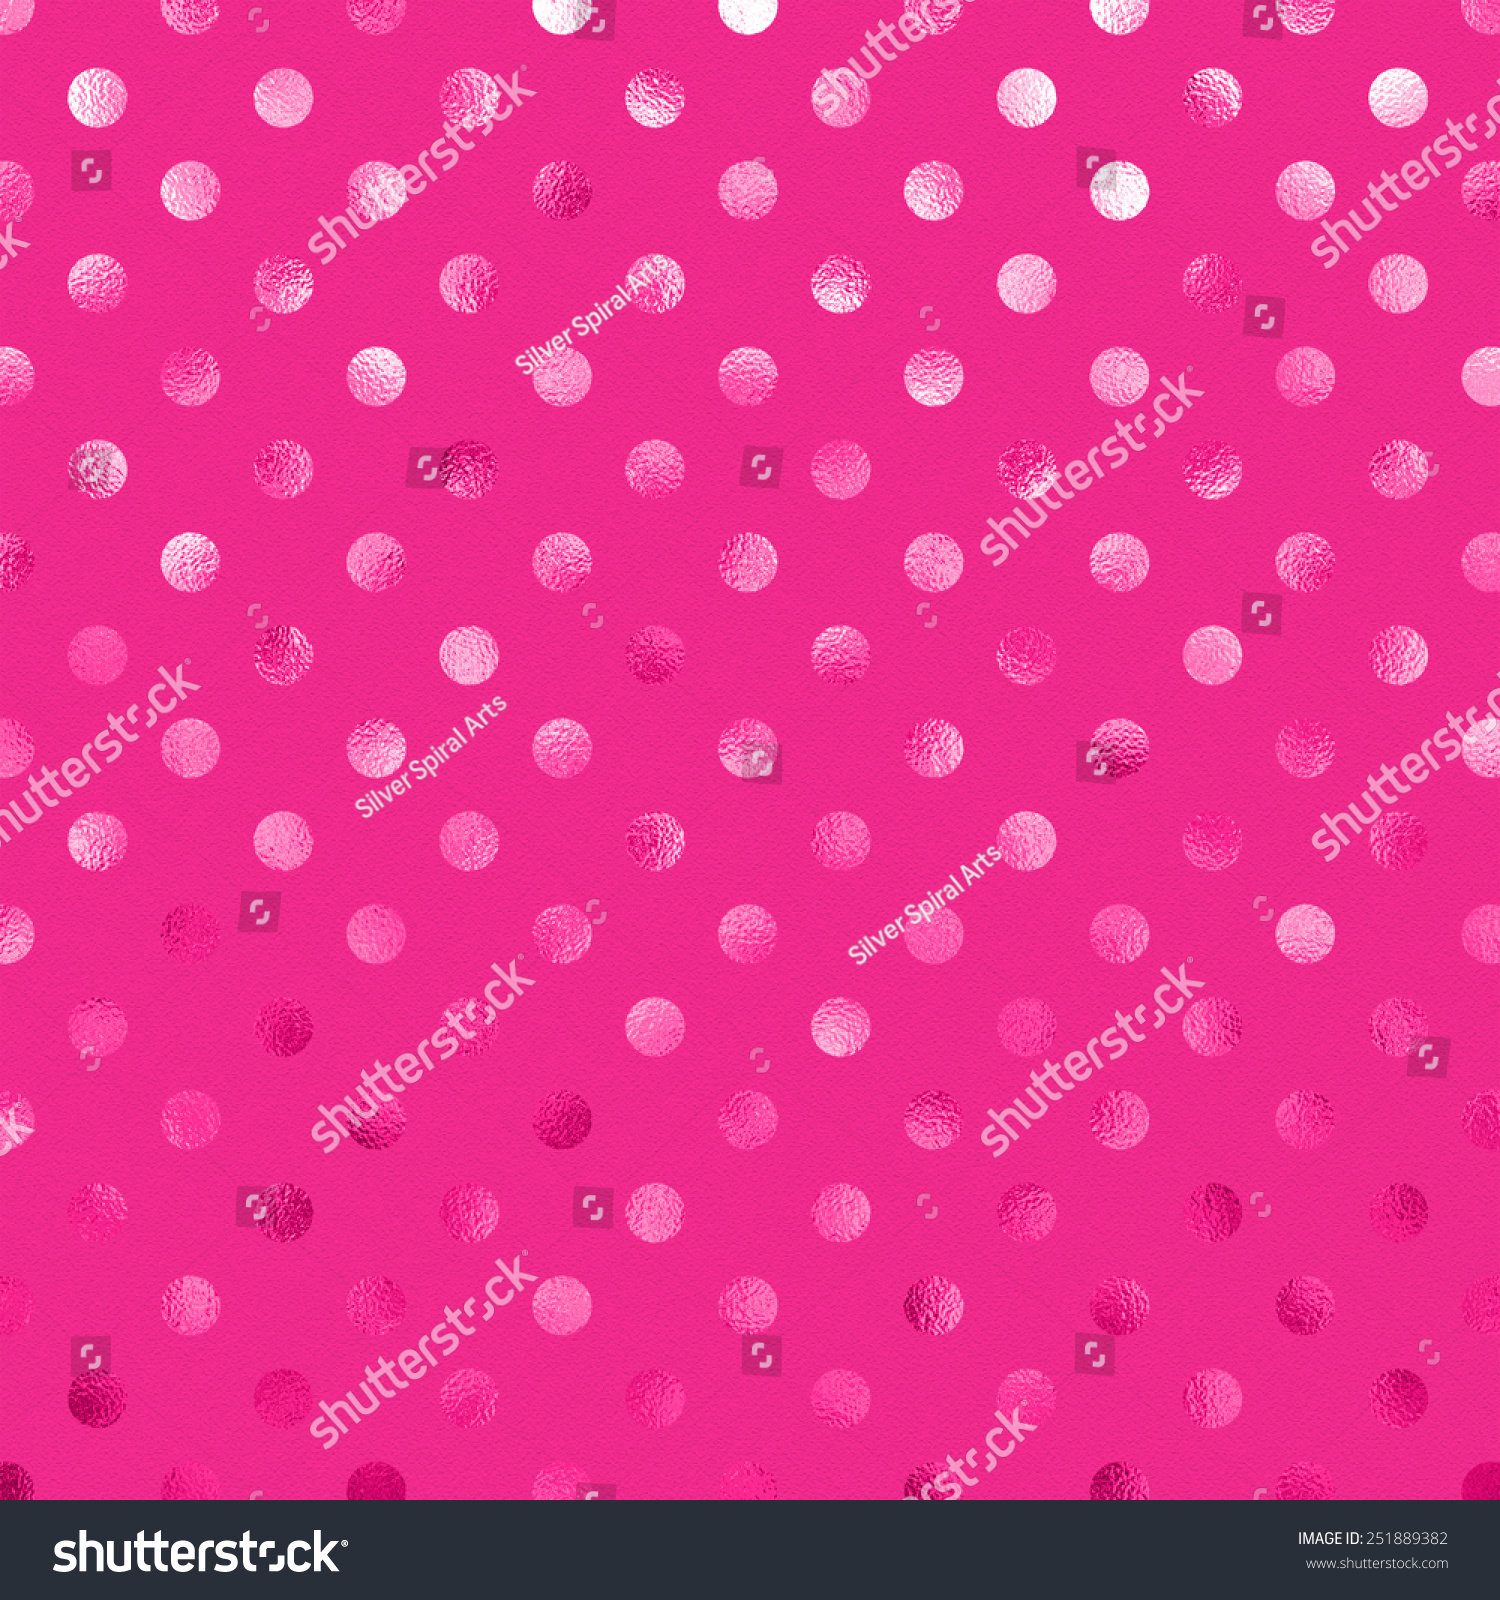 Hot Pink Metallic Foil Polka Dot Stock Illustration 251889382 ...